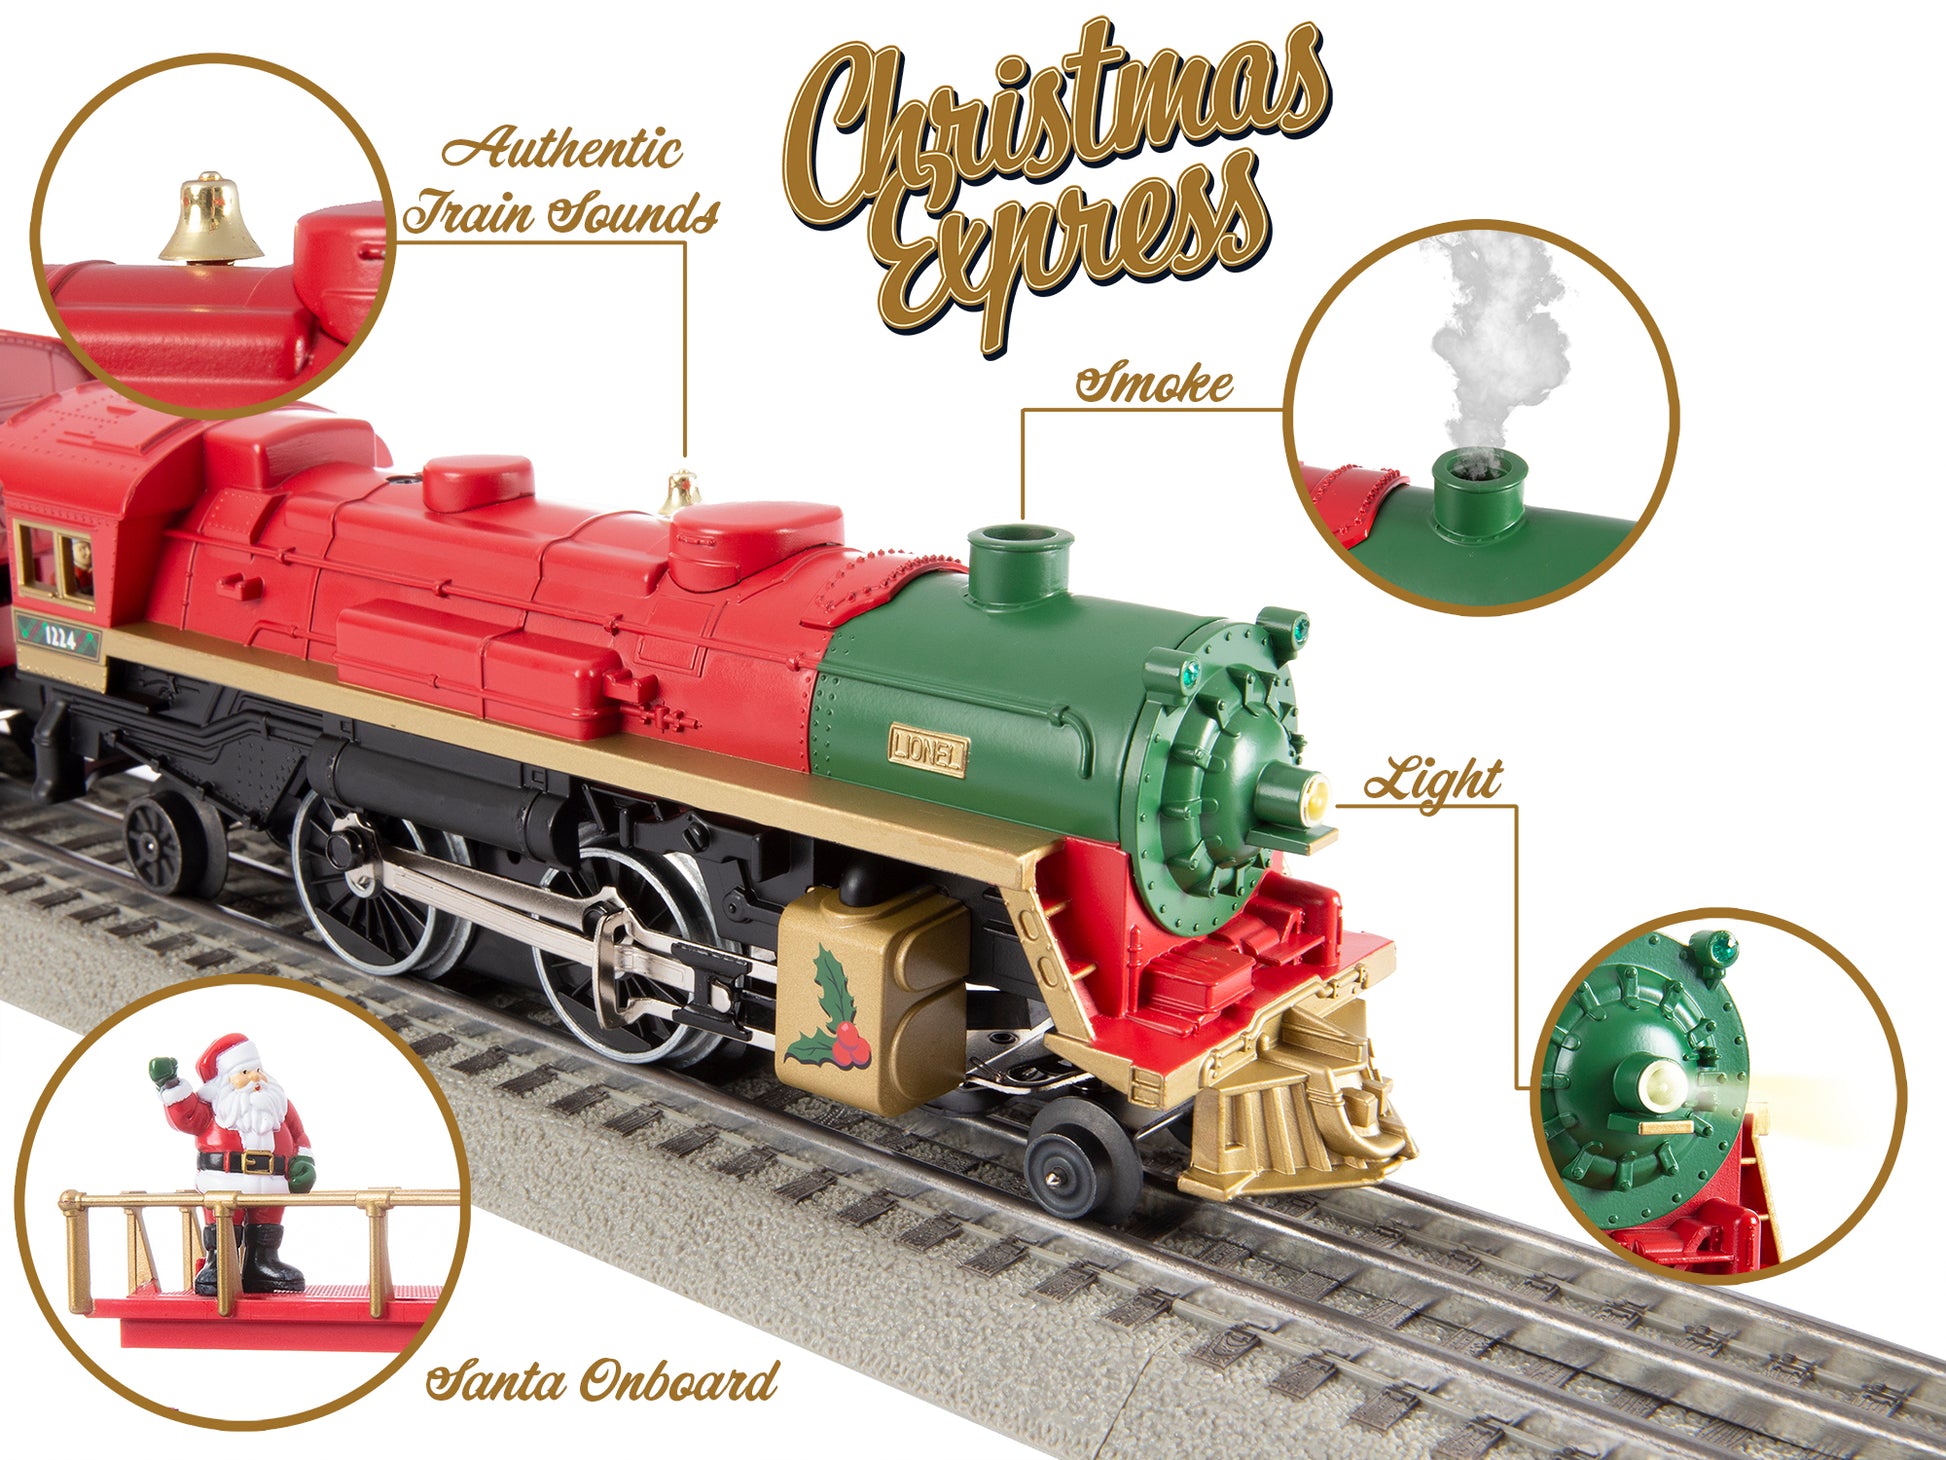 Lionel model train set O Scale Christmas Celebration LionChief. This is the locomotive.